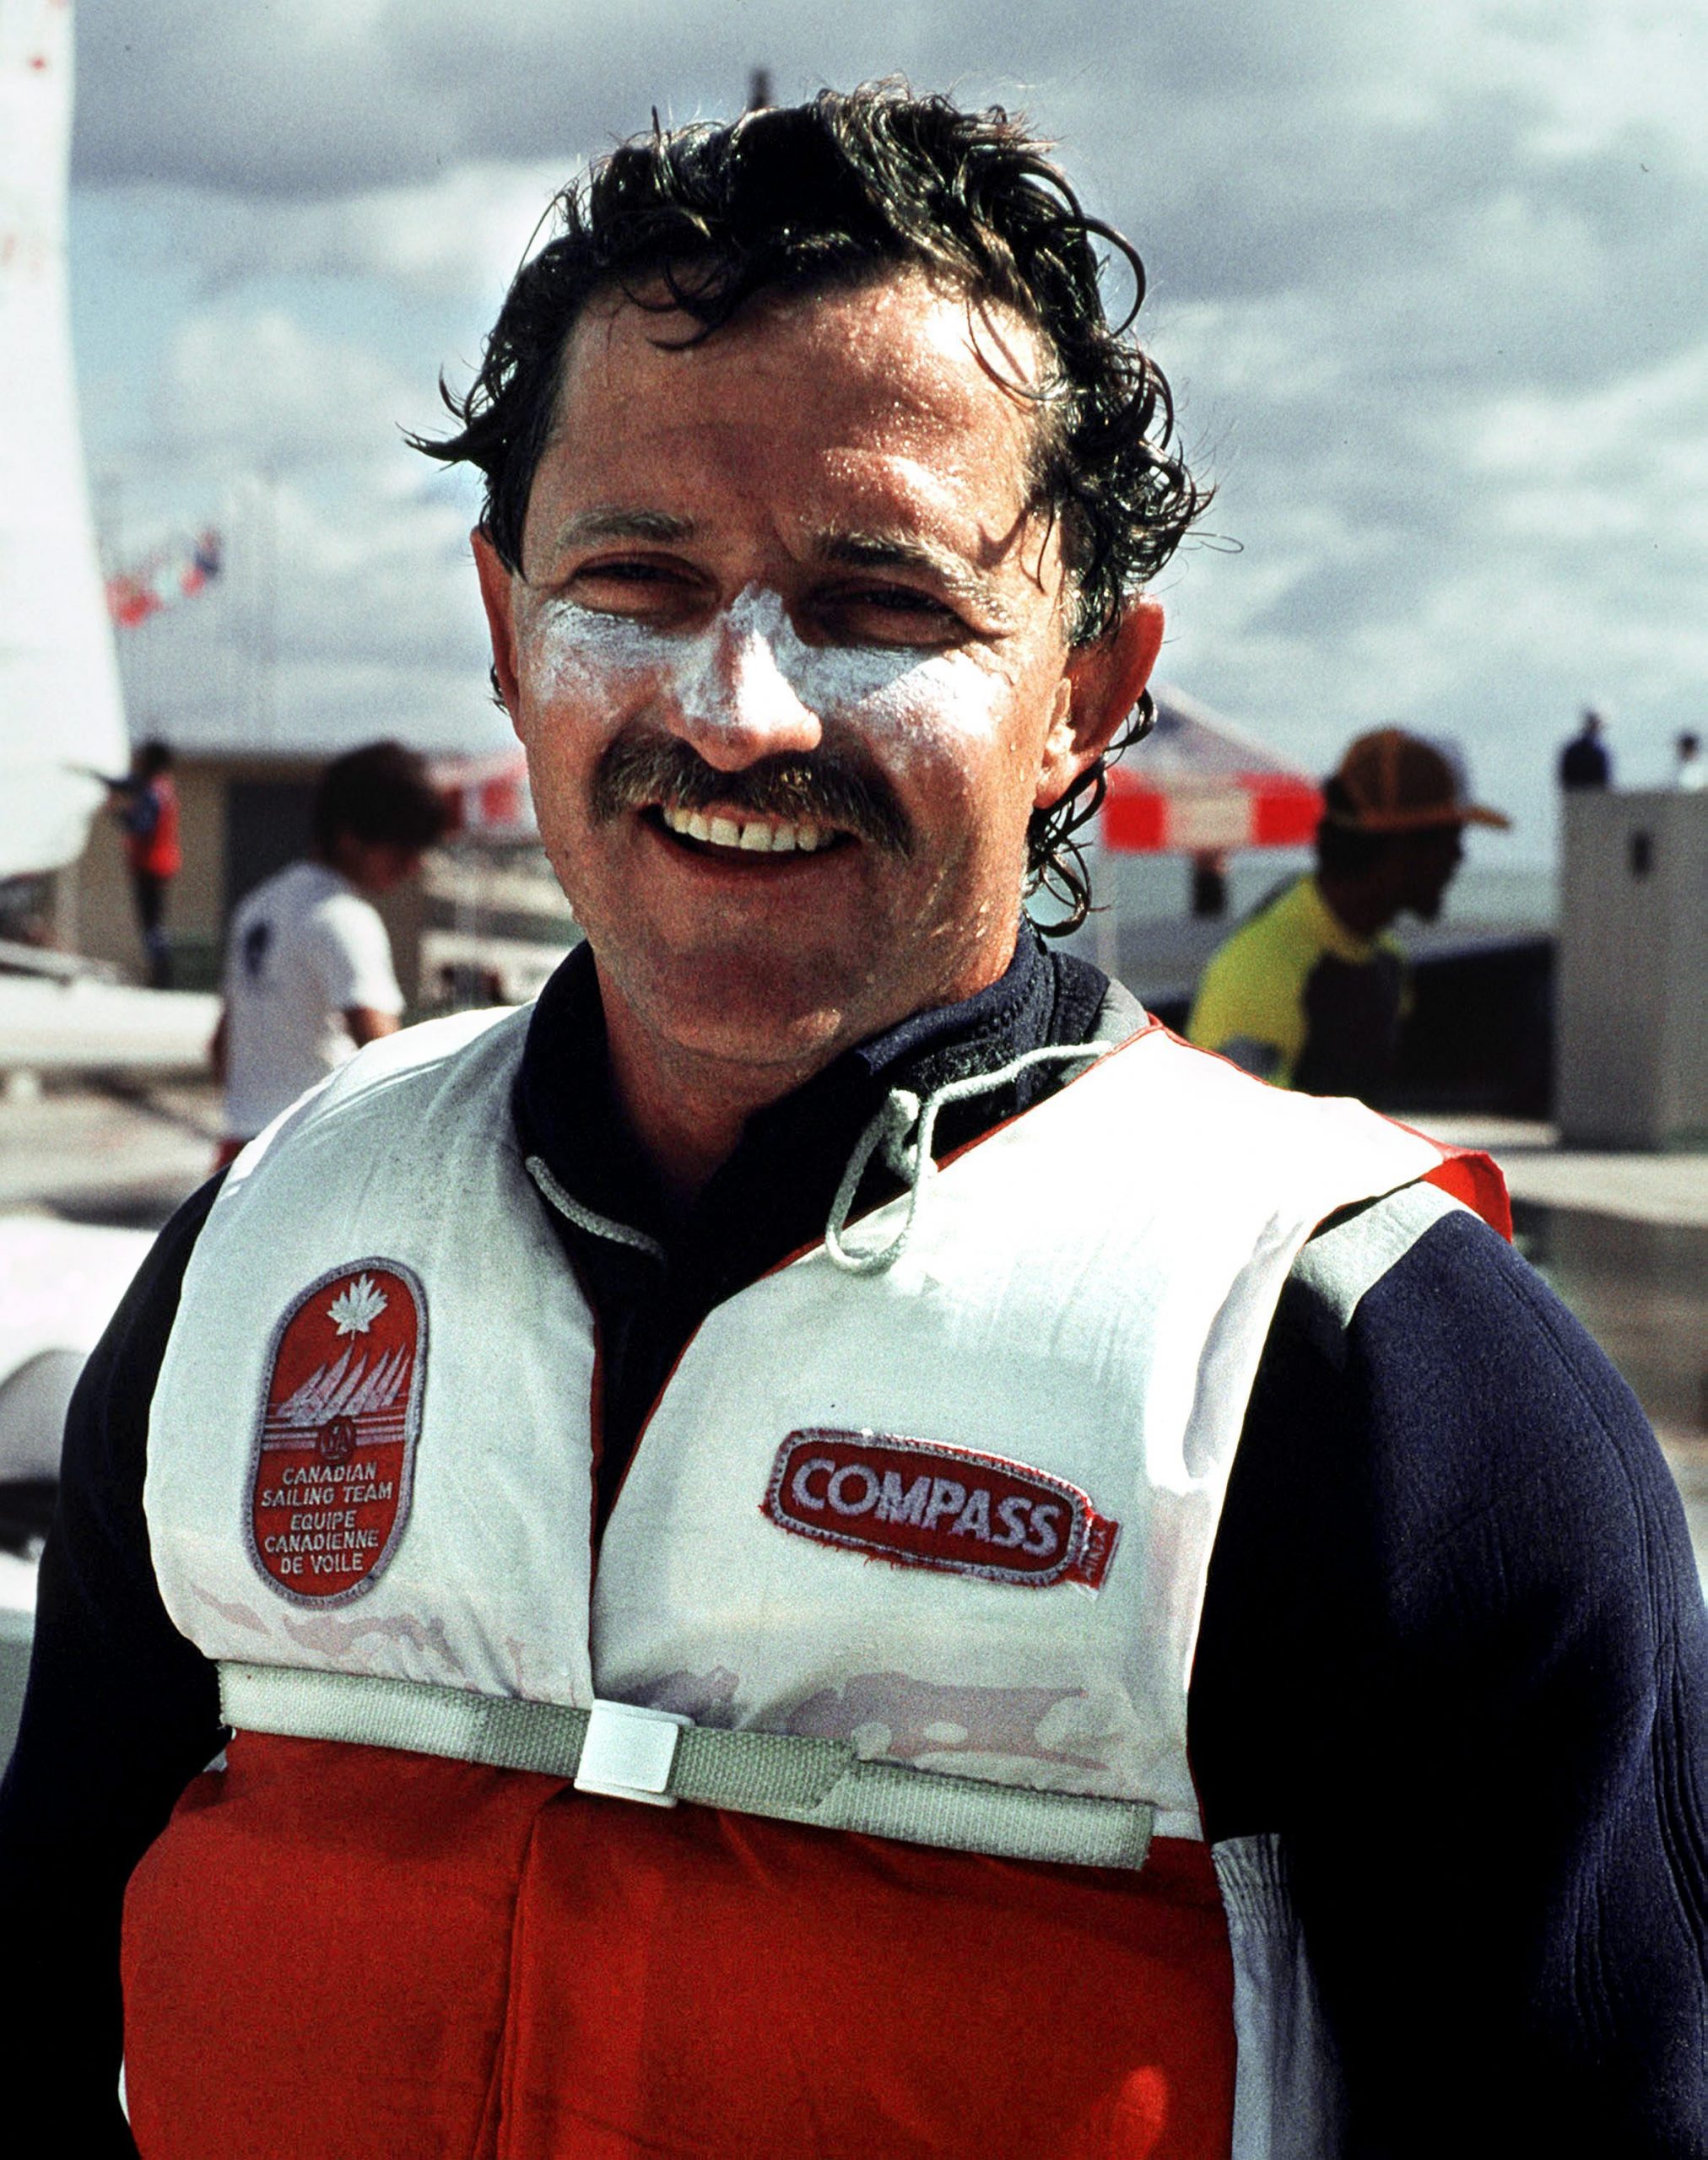 Lawrence Lemieux smiling while wearing his life jacket